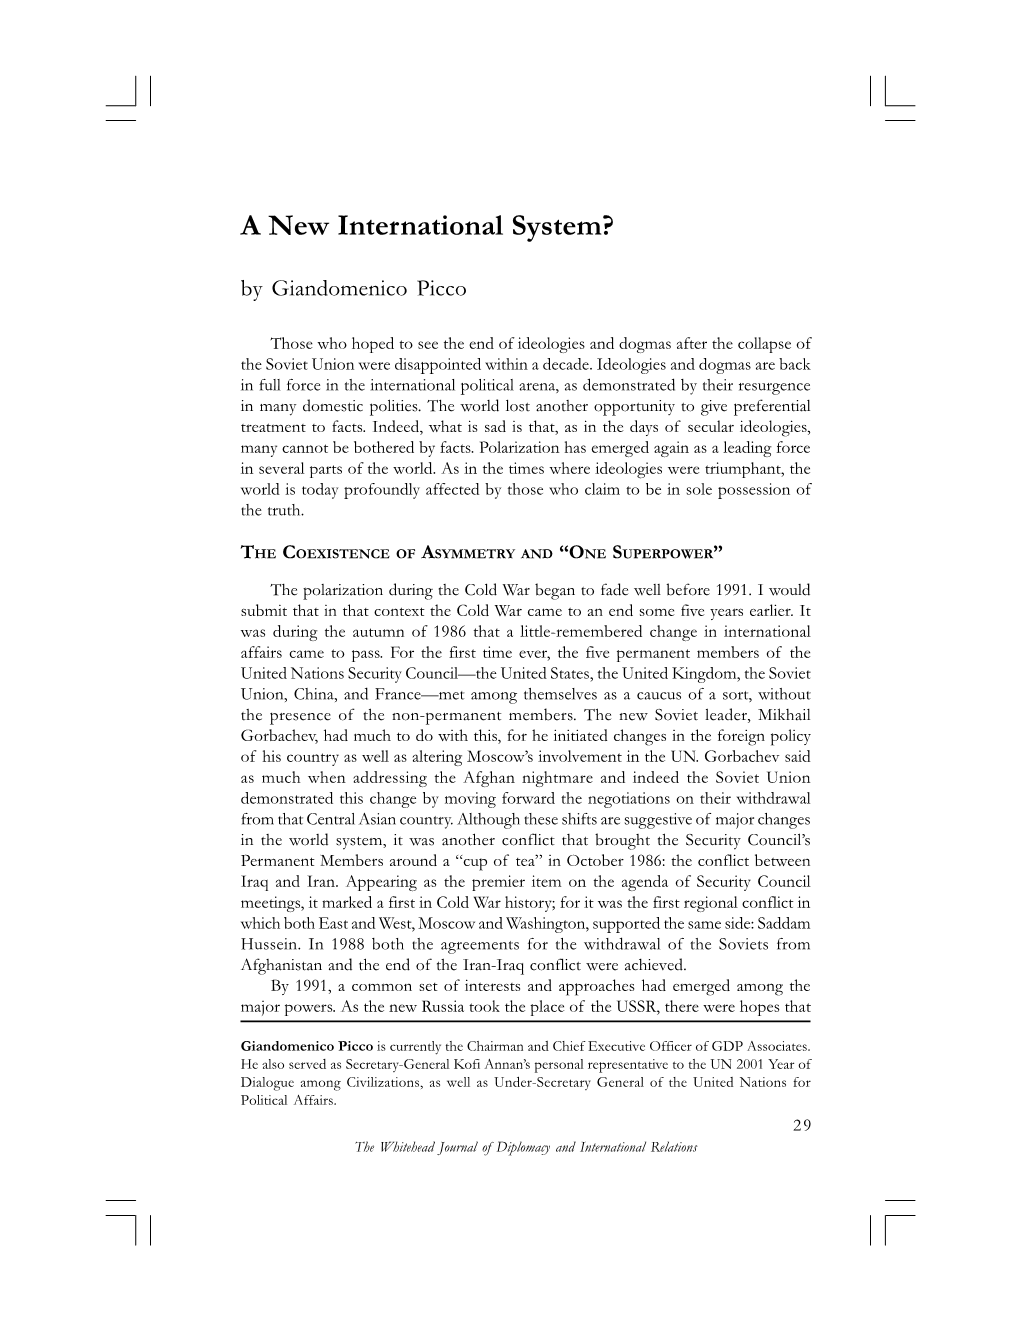 A New International System? by Giandomenico Picco